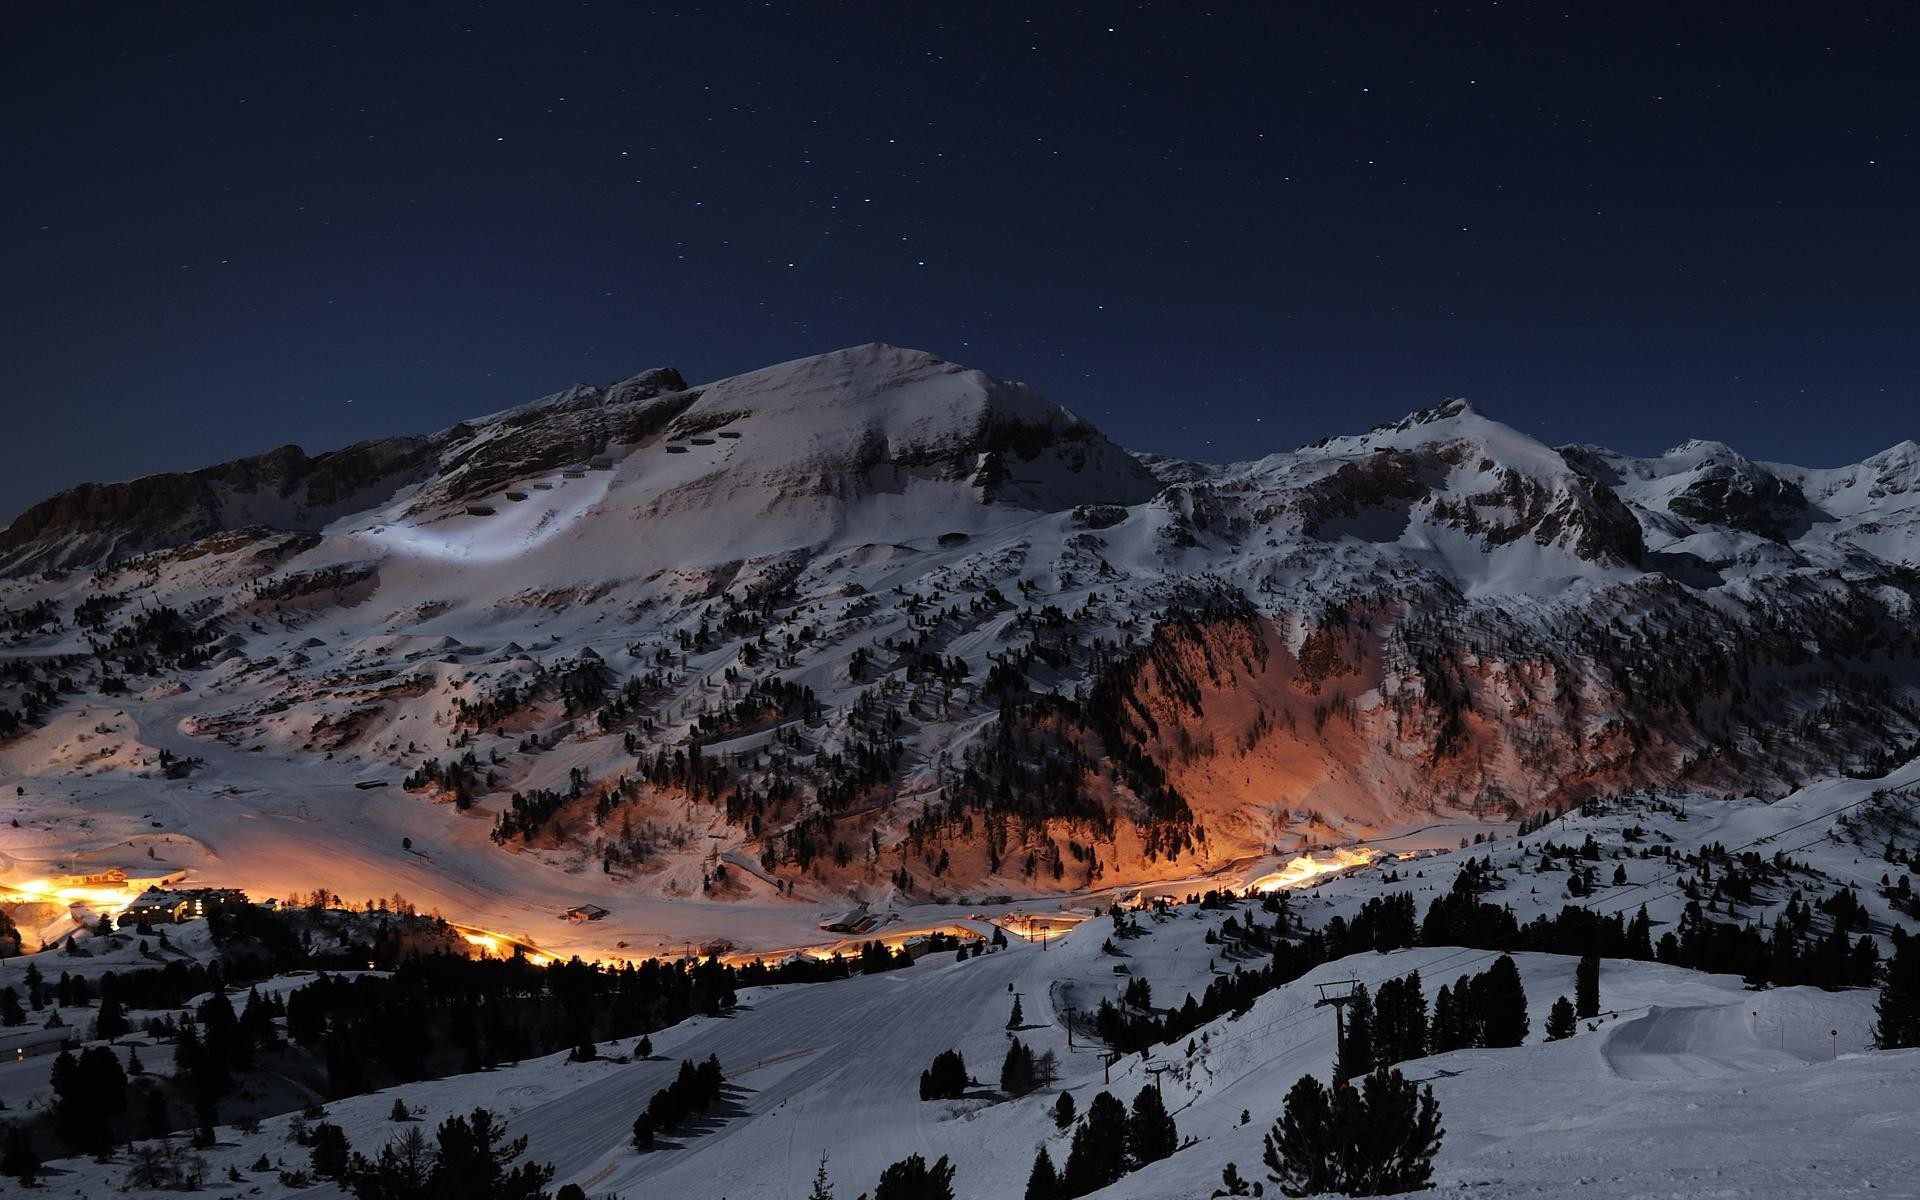 Image: Mountains, night, sky, stars, lights, trees, snow, winter, base